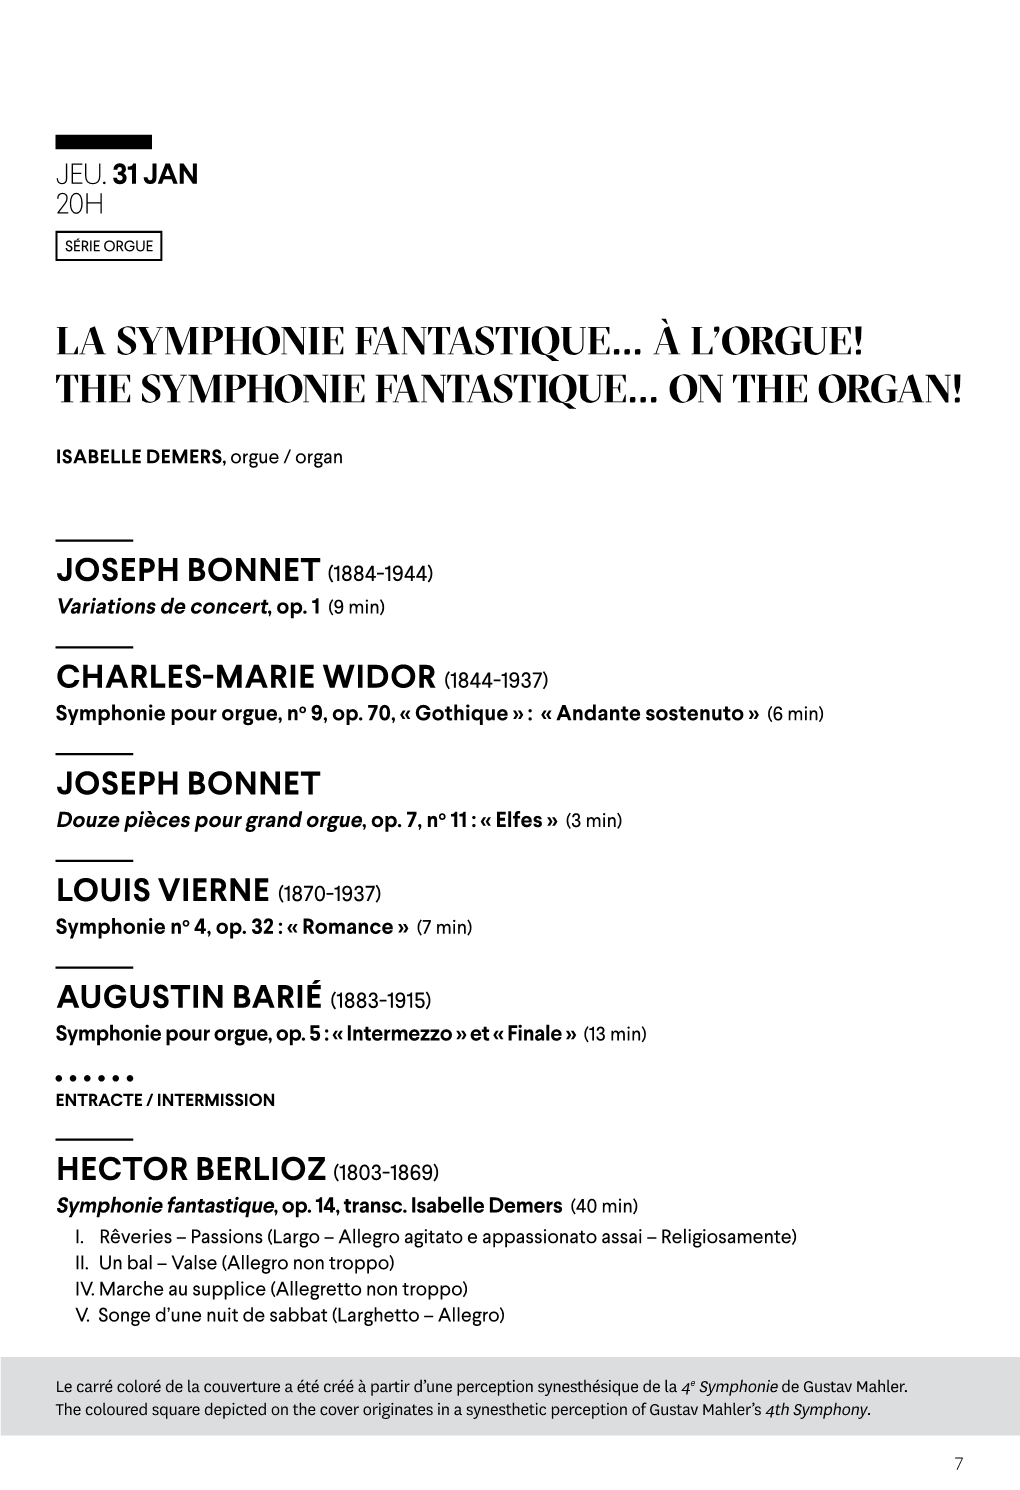 The Symphonie Fantastique… on the Organ!